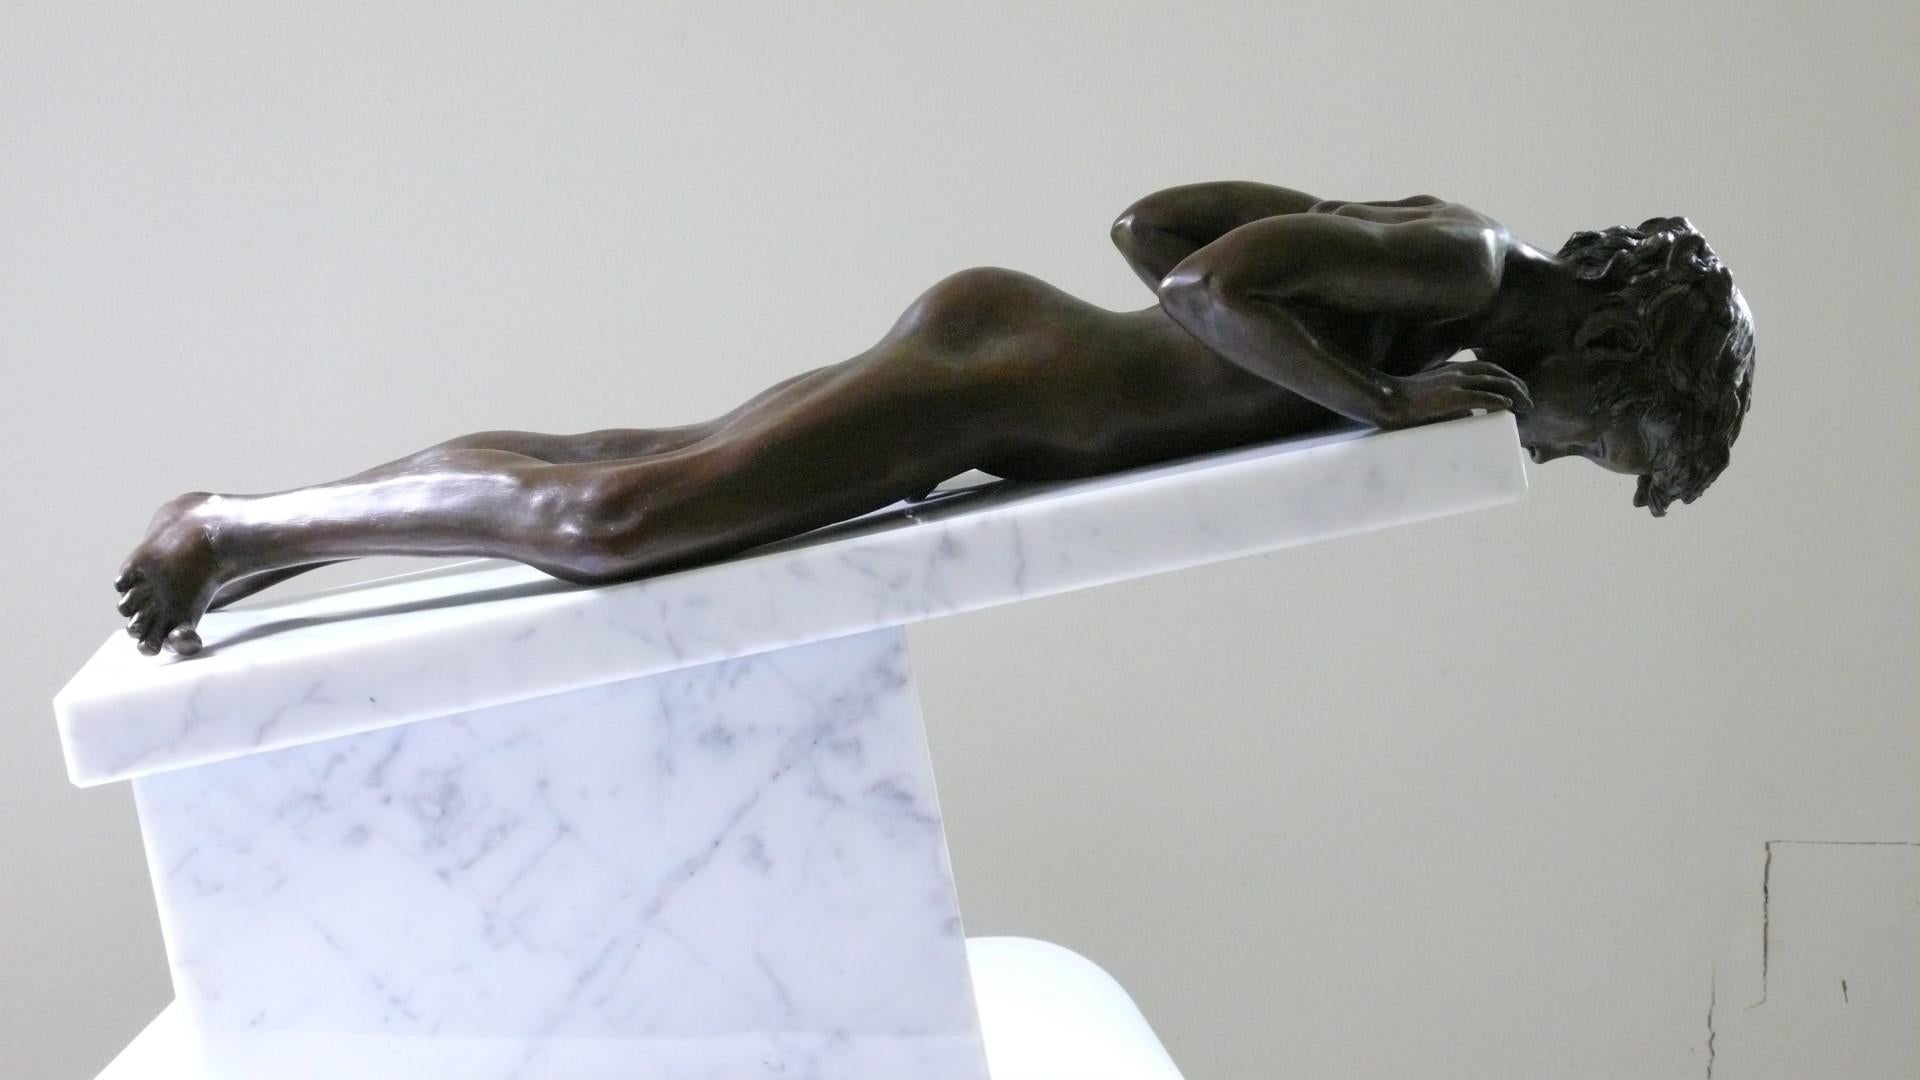 Profundus Bronze Sculpture Nude Boy Contemporary Male Figure Marble Stone - Gold Figurative Sculpture by Wim van der Kant